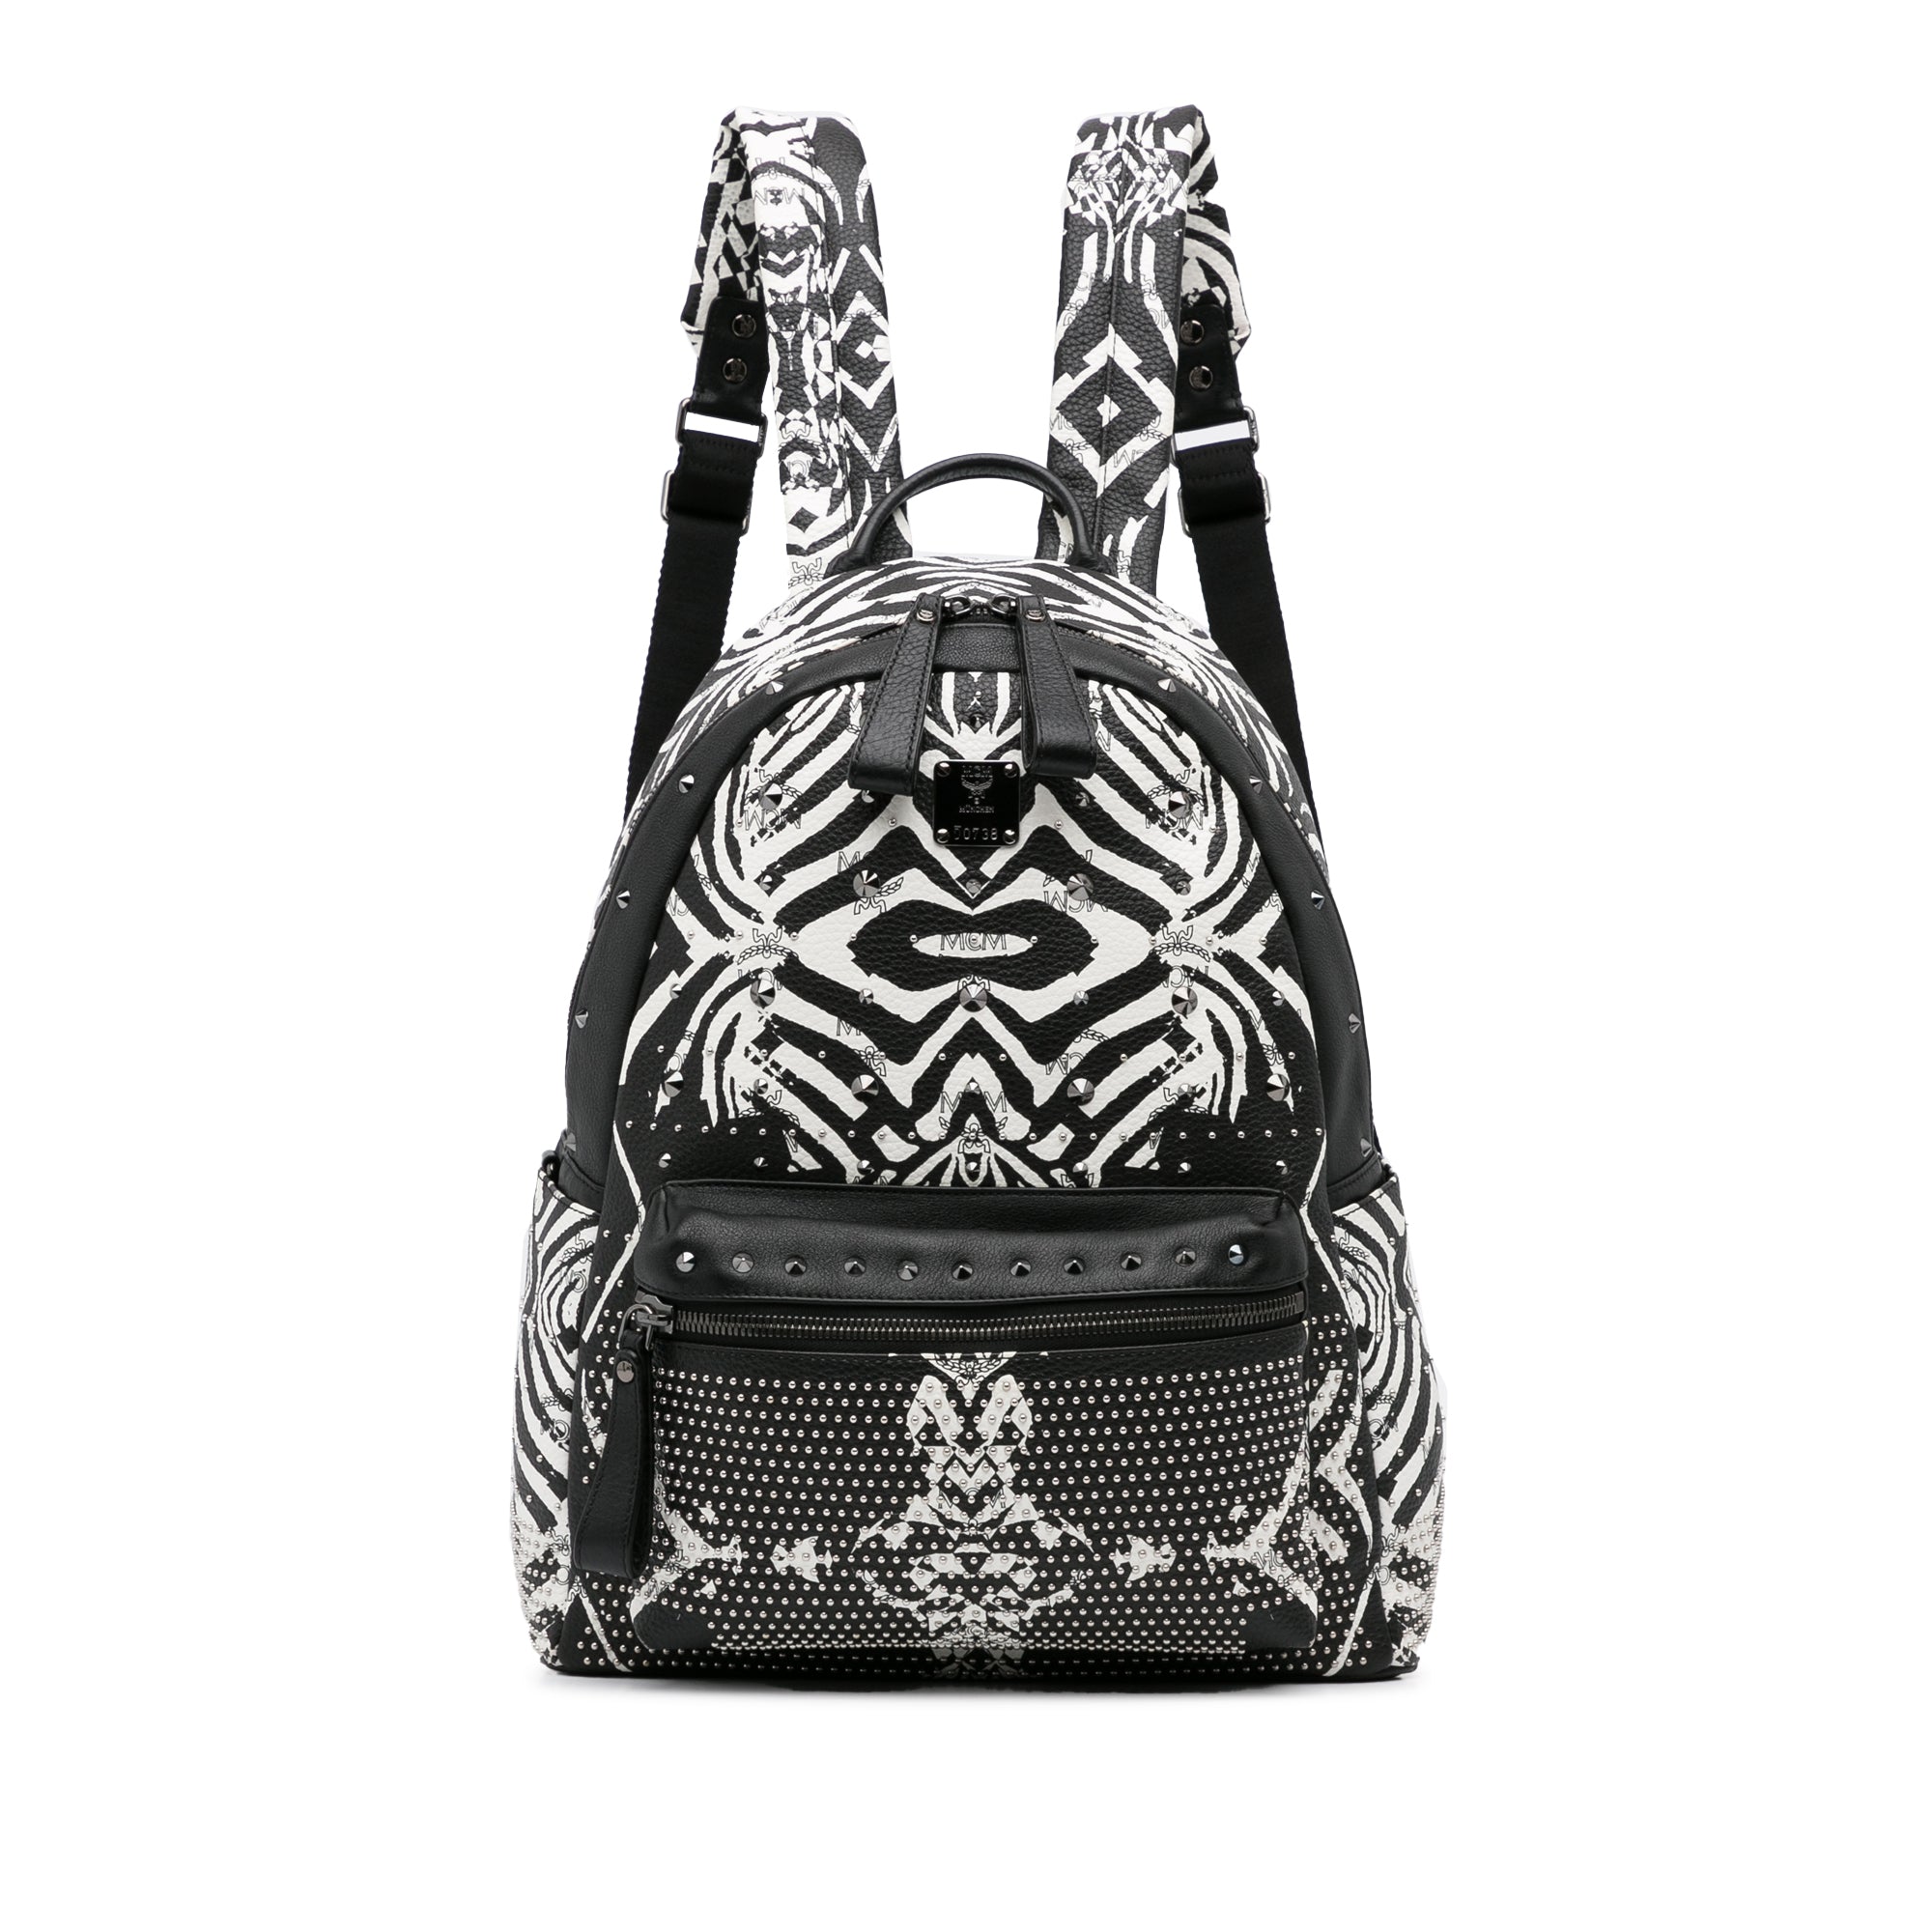 Branded Handbag Black mcm Full Front Button Backpack Made In Korea